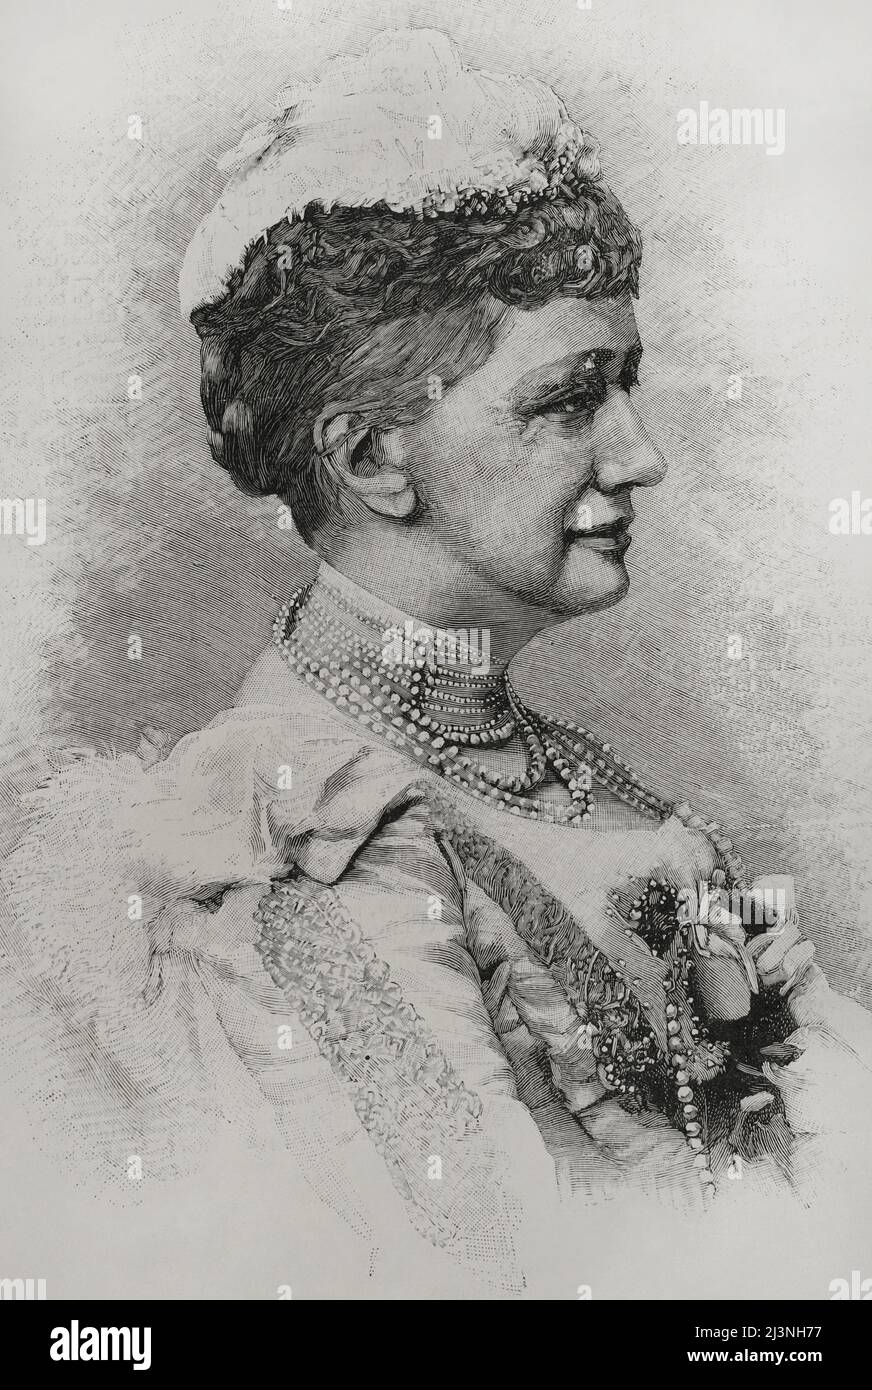 Louise of Hesse-Kassel (1817-1898). Queen consort of Denmark as wife of King Christian IX. Portrait. Engraving. La Ilustración Española y Americana, 1898. Stock Photo